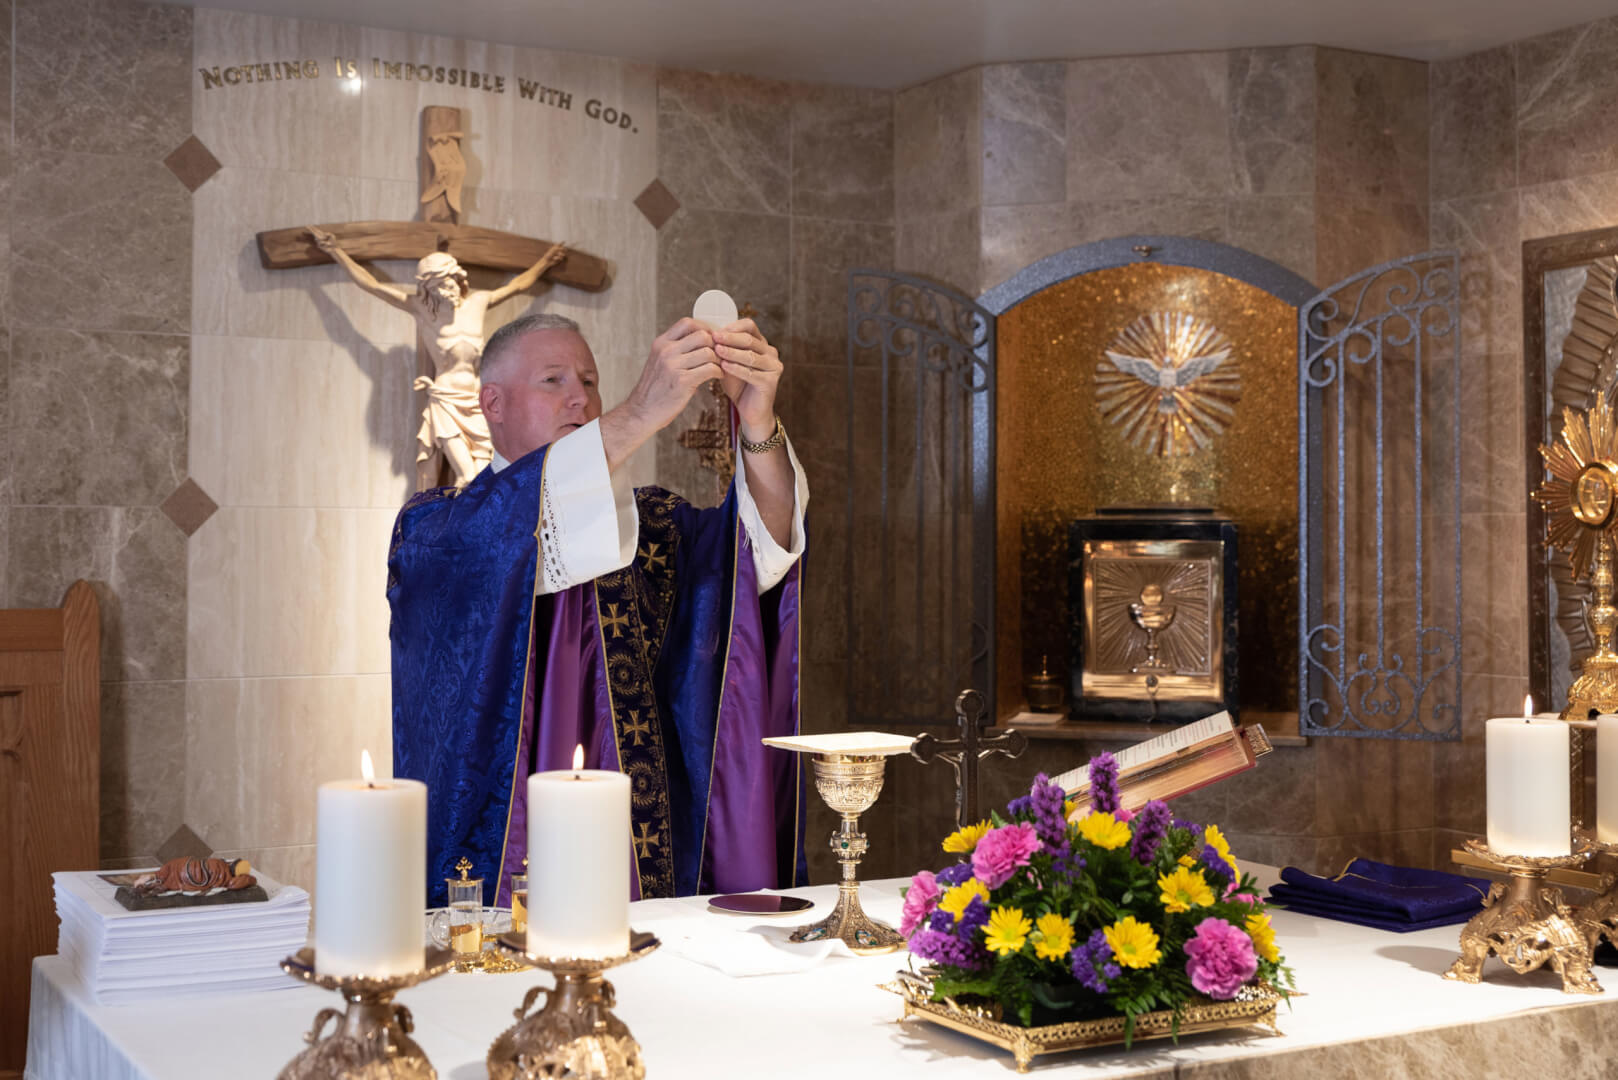 Fr Rocky celebrates Mass at Relevant Radio